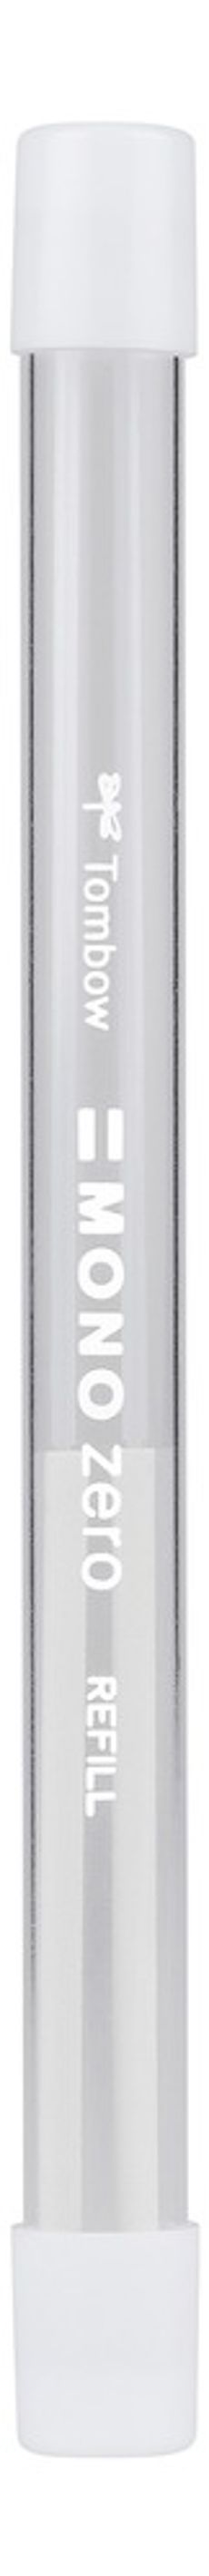 Recharge pour stylo-gomme MONO zéro pointe ronde recharge